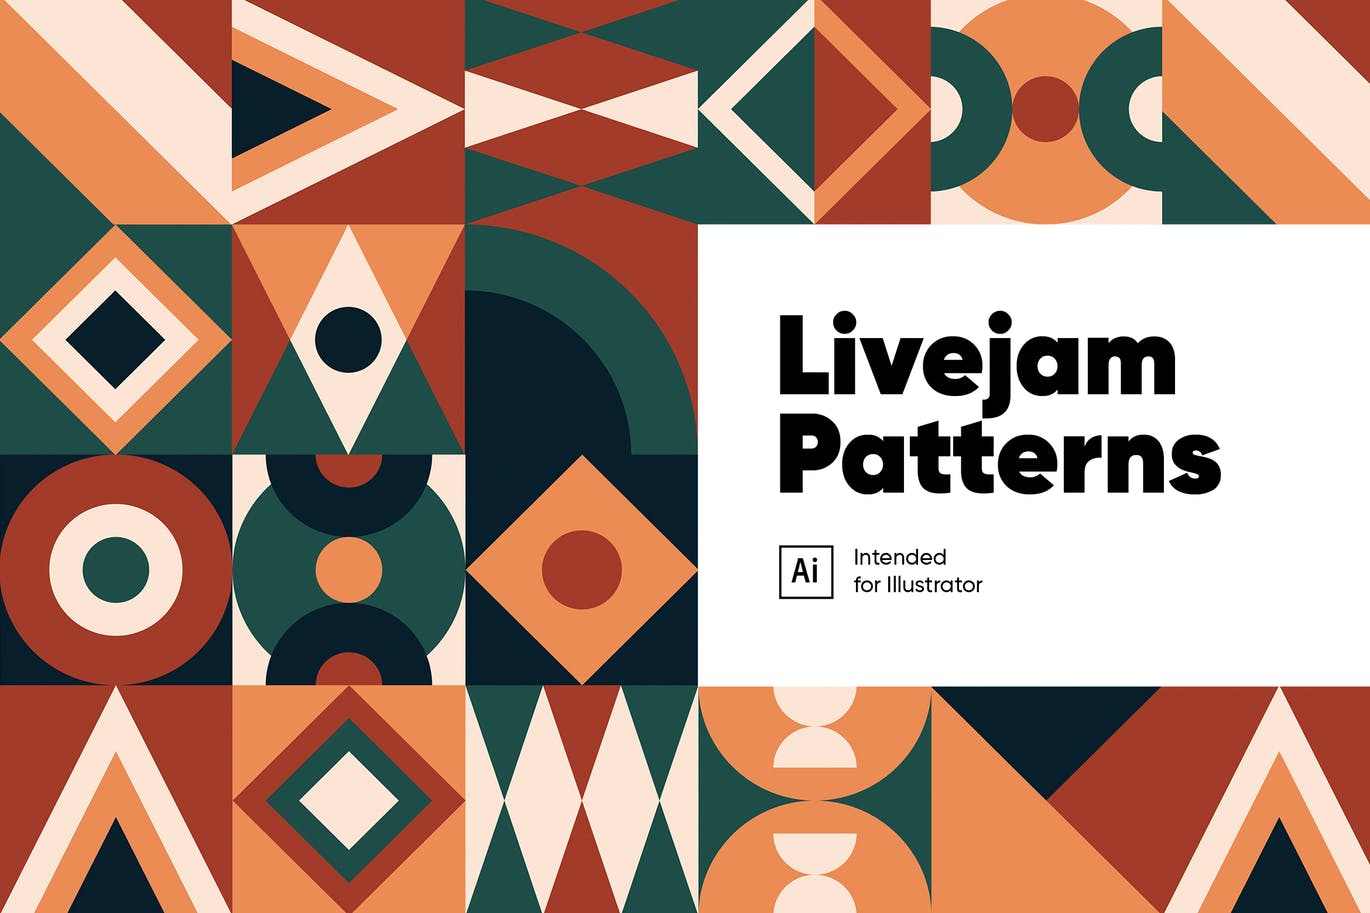 Livejam抽象图案背景第一素材精选 Livejam Abstract Patterns Pack插图